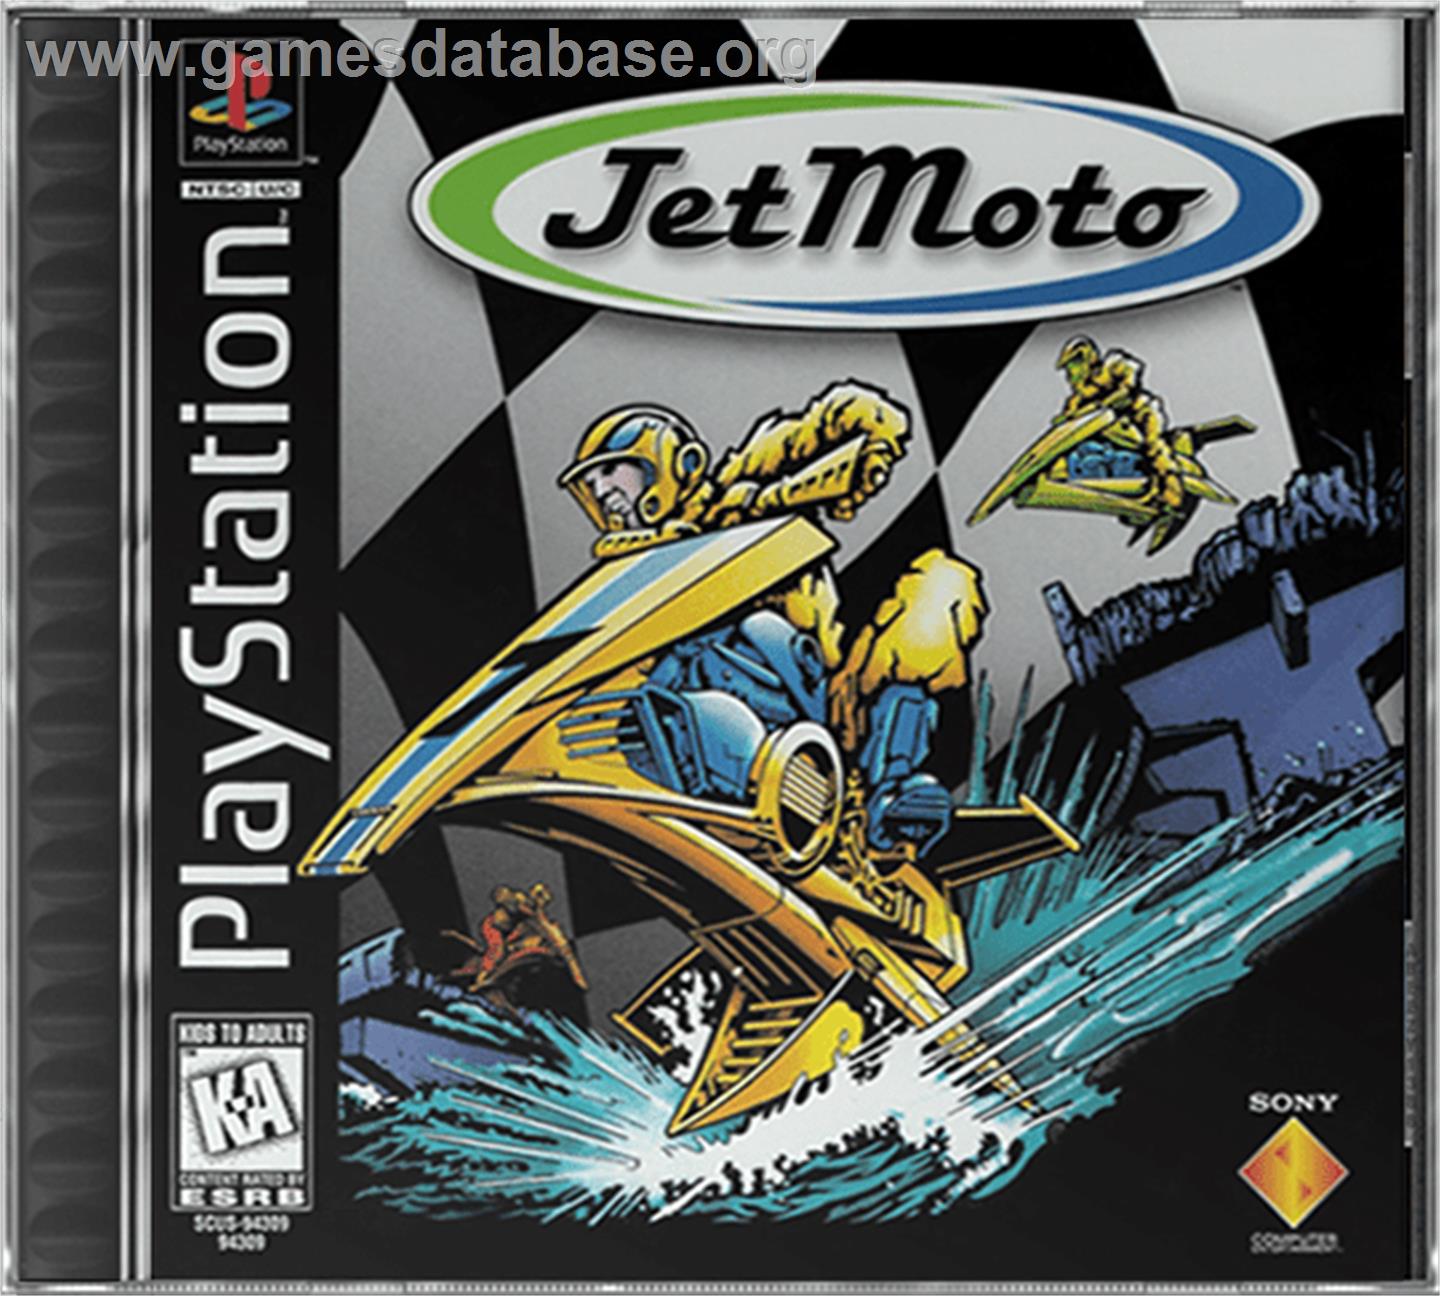 Jet Moto - Sony Playstation - Artwork - Box